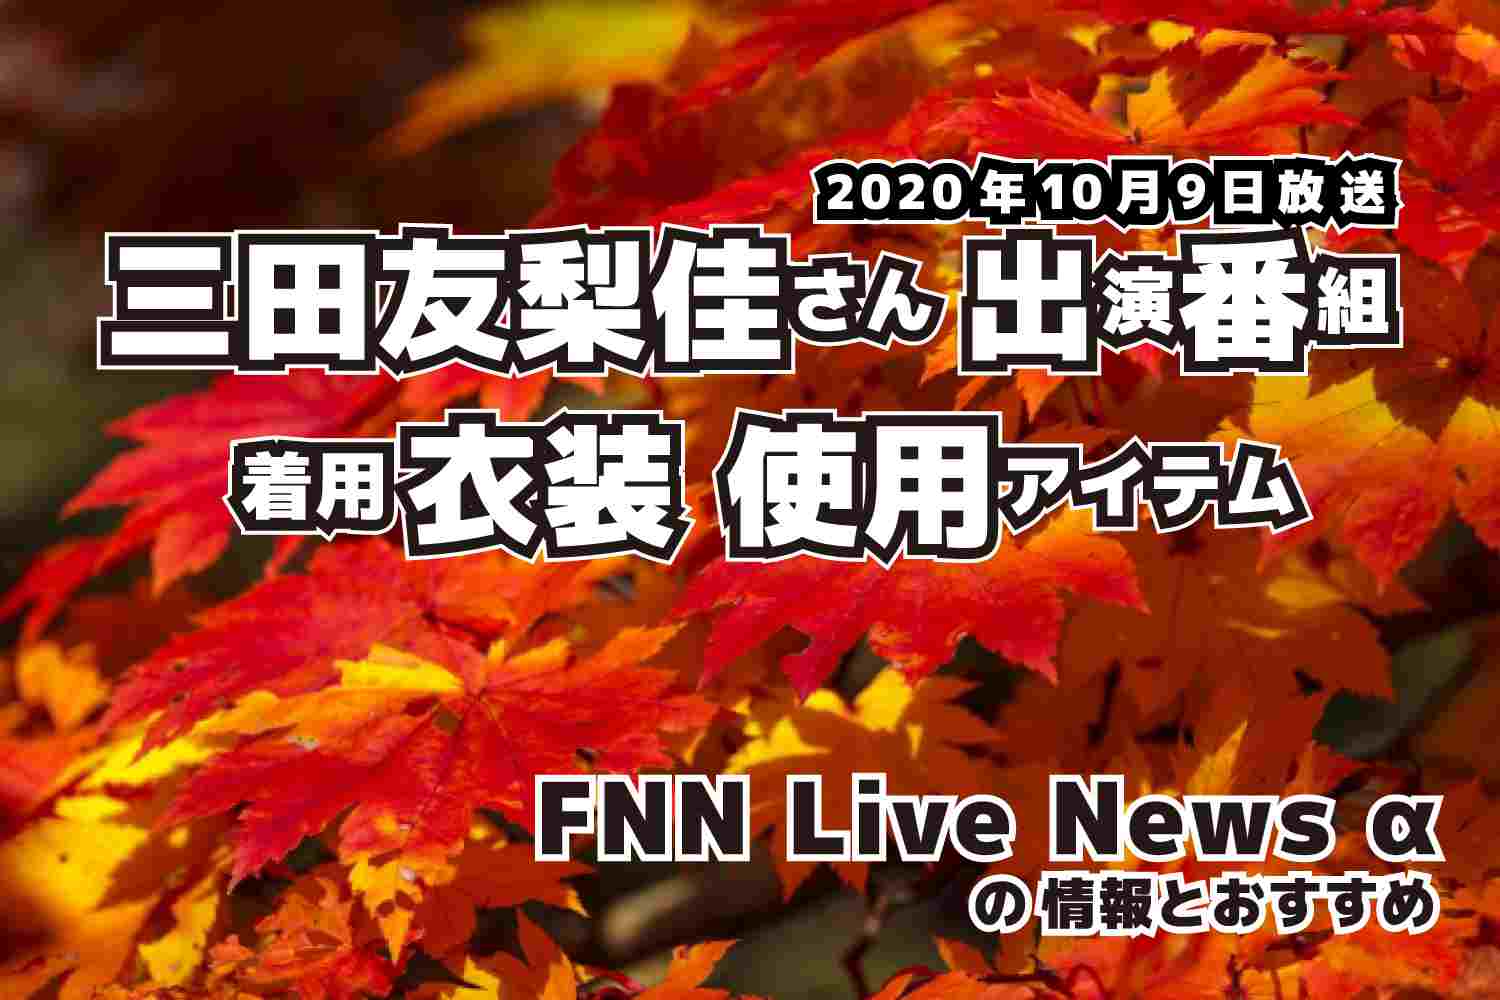 FNN Live News α　三田友梨佳さん 　衣装　2020年10月9日放送